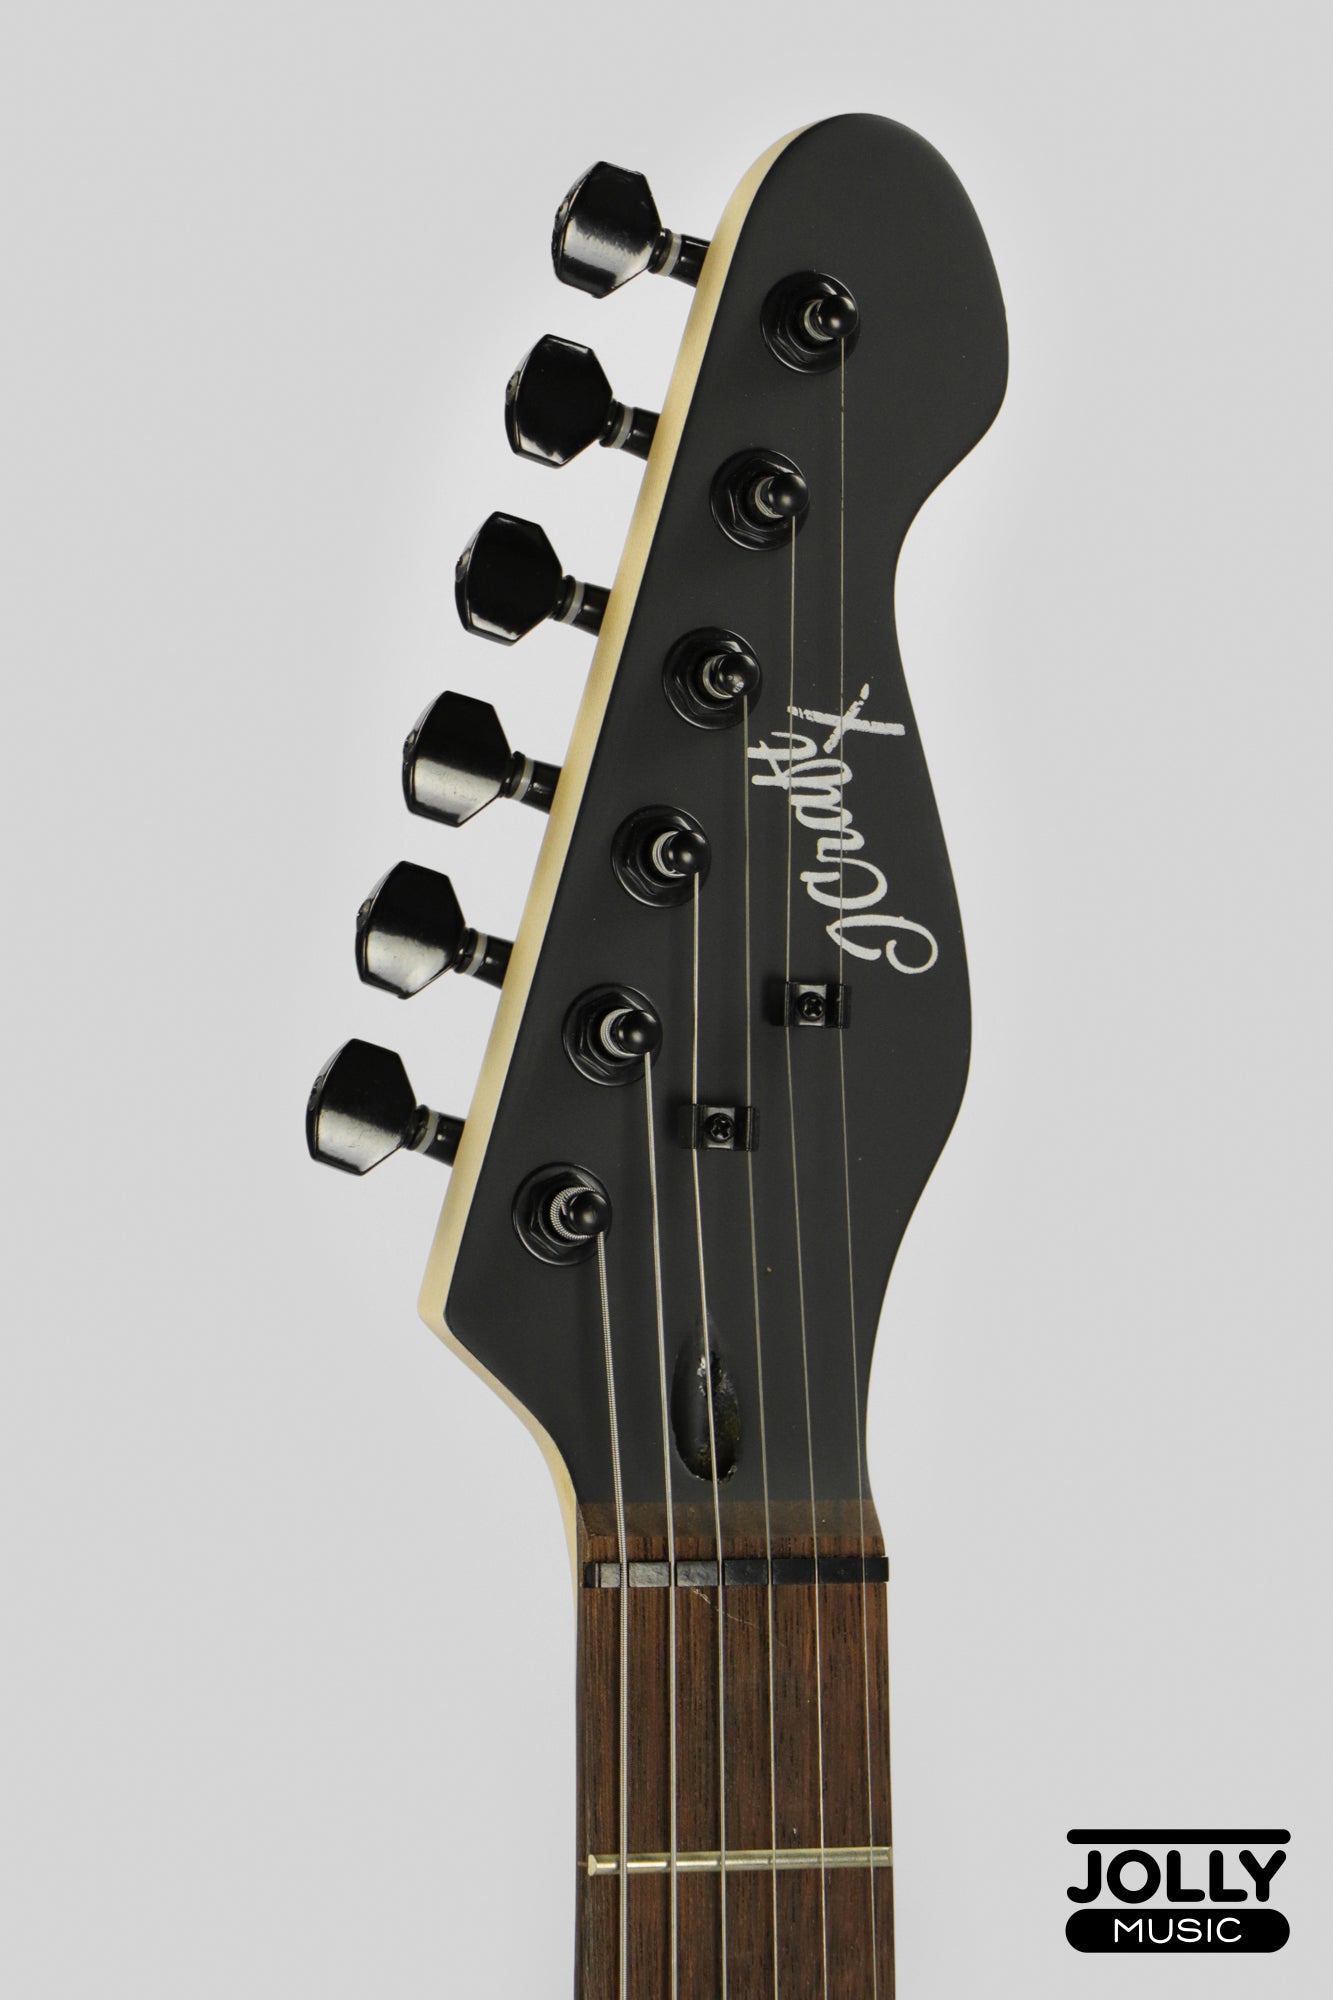 JCraft LTX-1 Double Humbucker Electric Guitar with Gigbag - Gunmetal